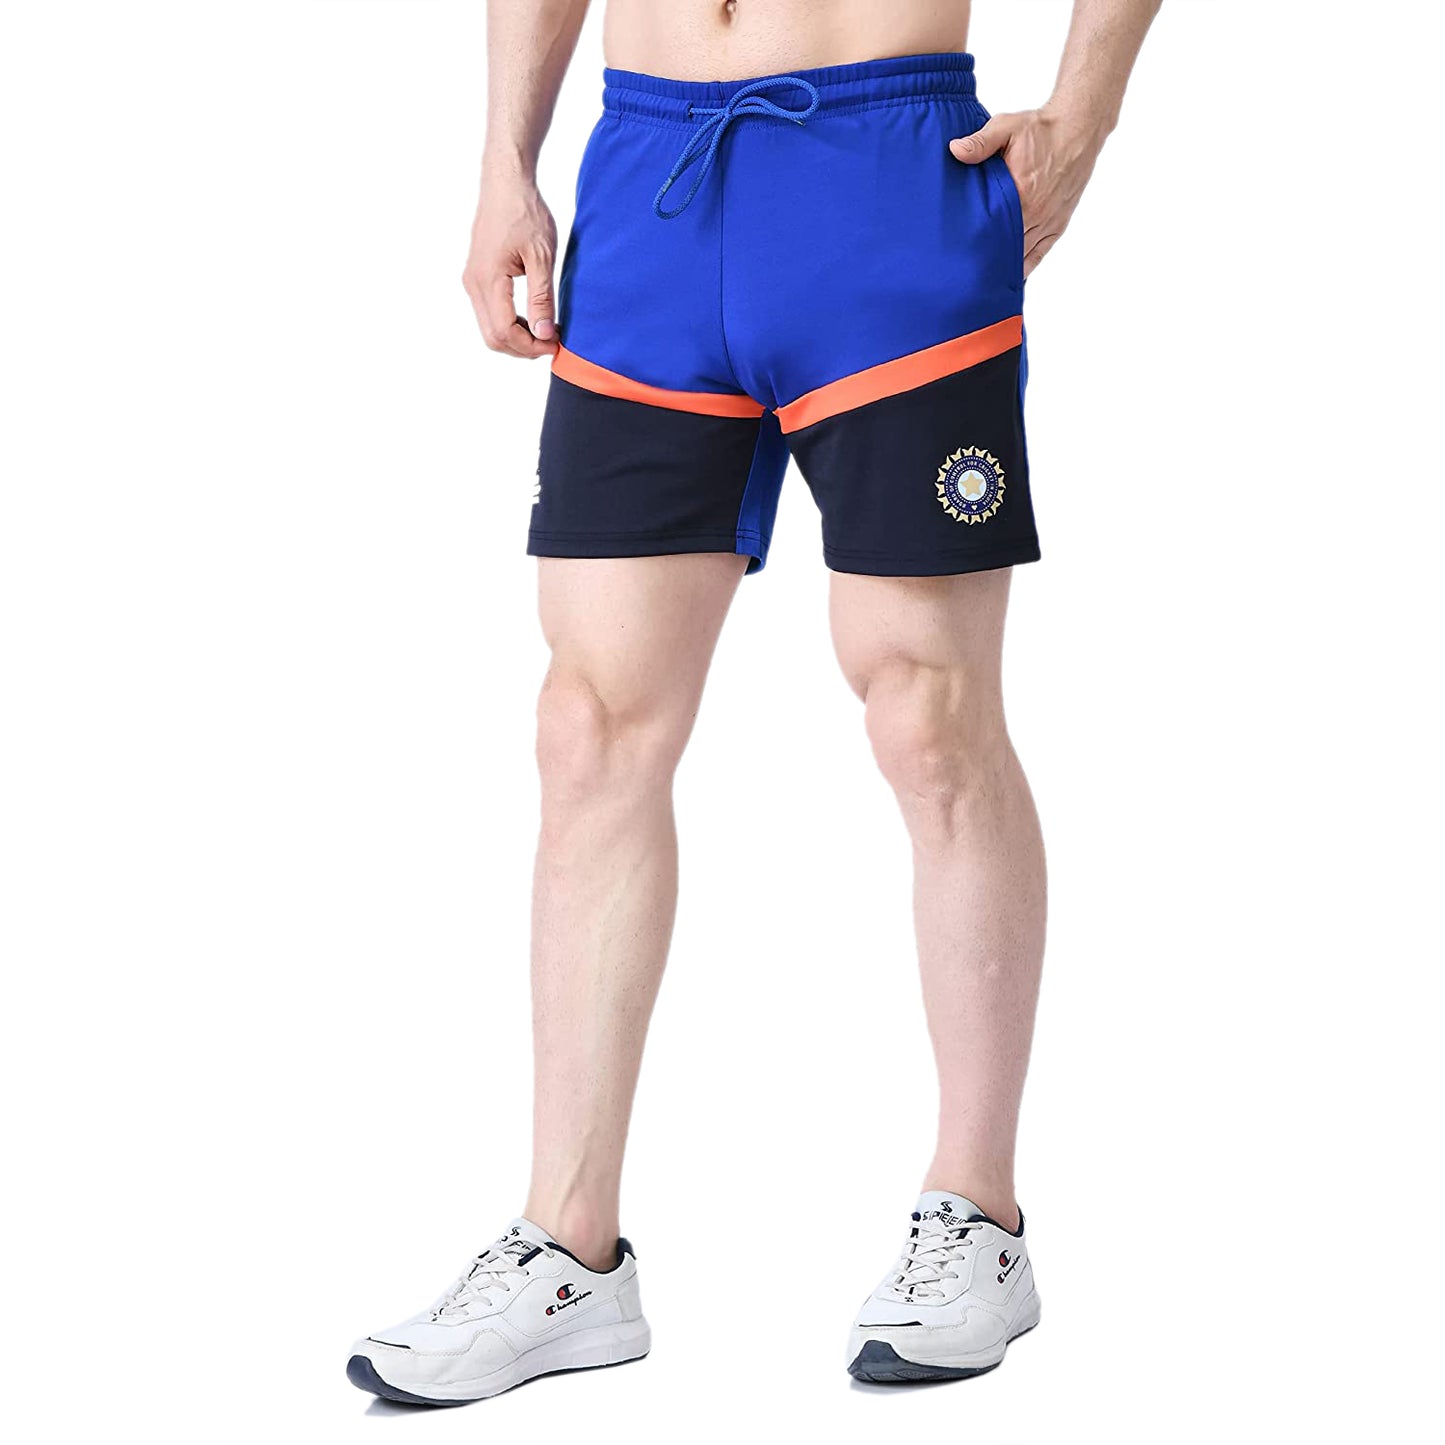 Playr Icc T20 Men's Hybrid Shorts - Best Price online Prokicksports.com